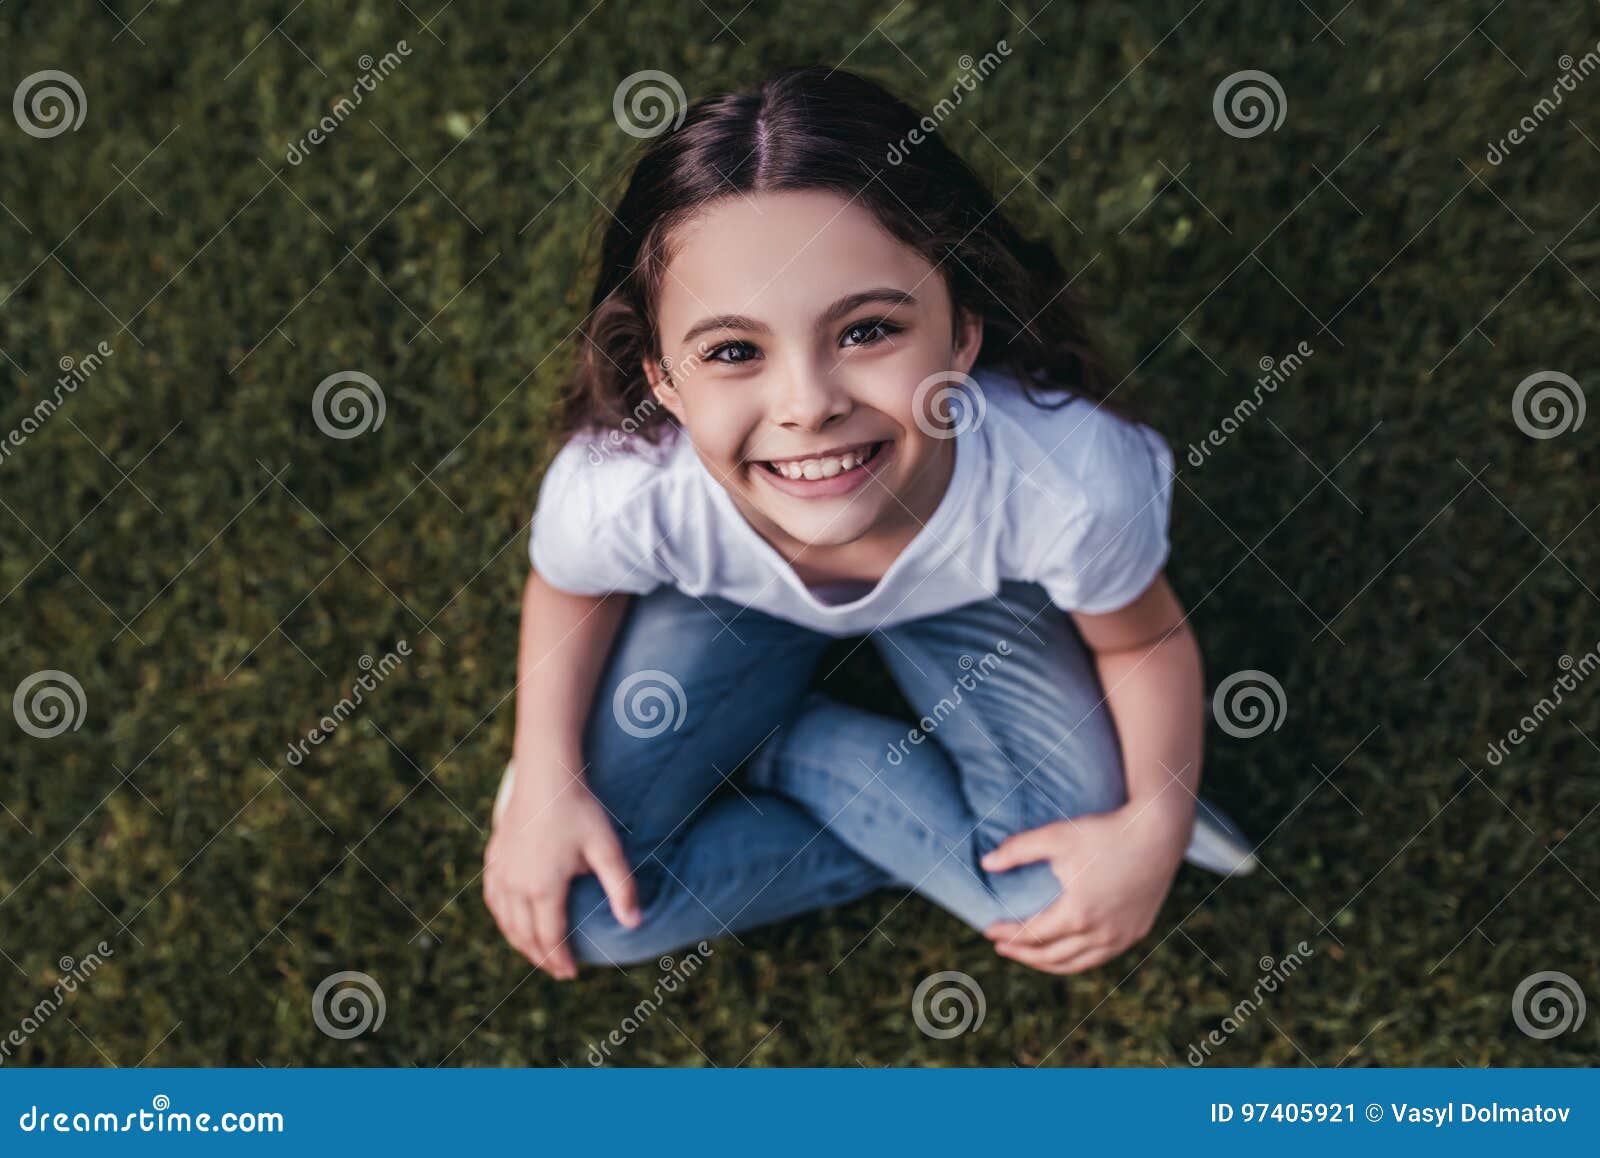 little girl on backyard